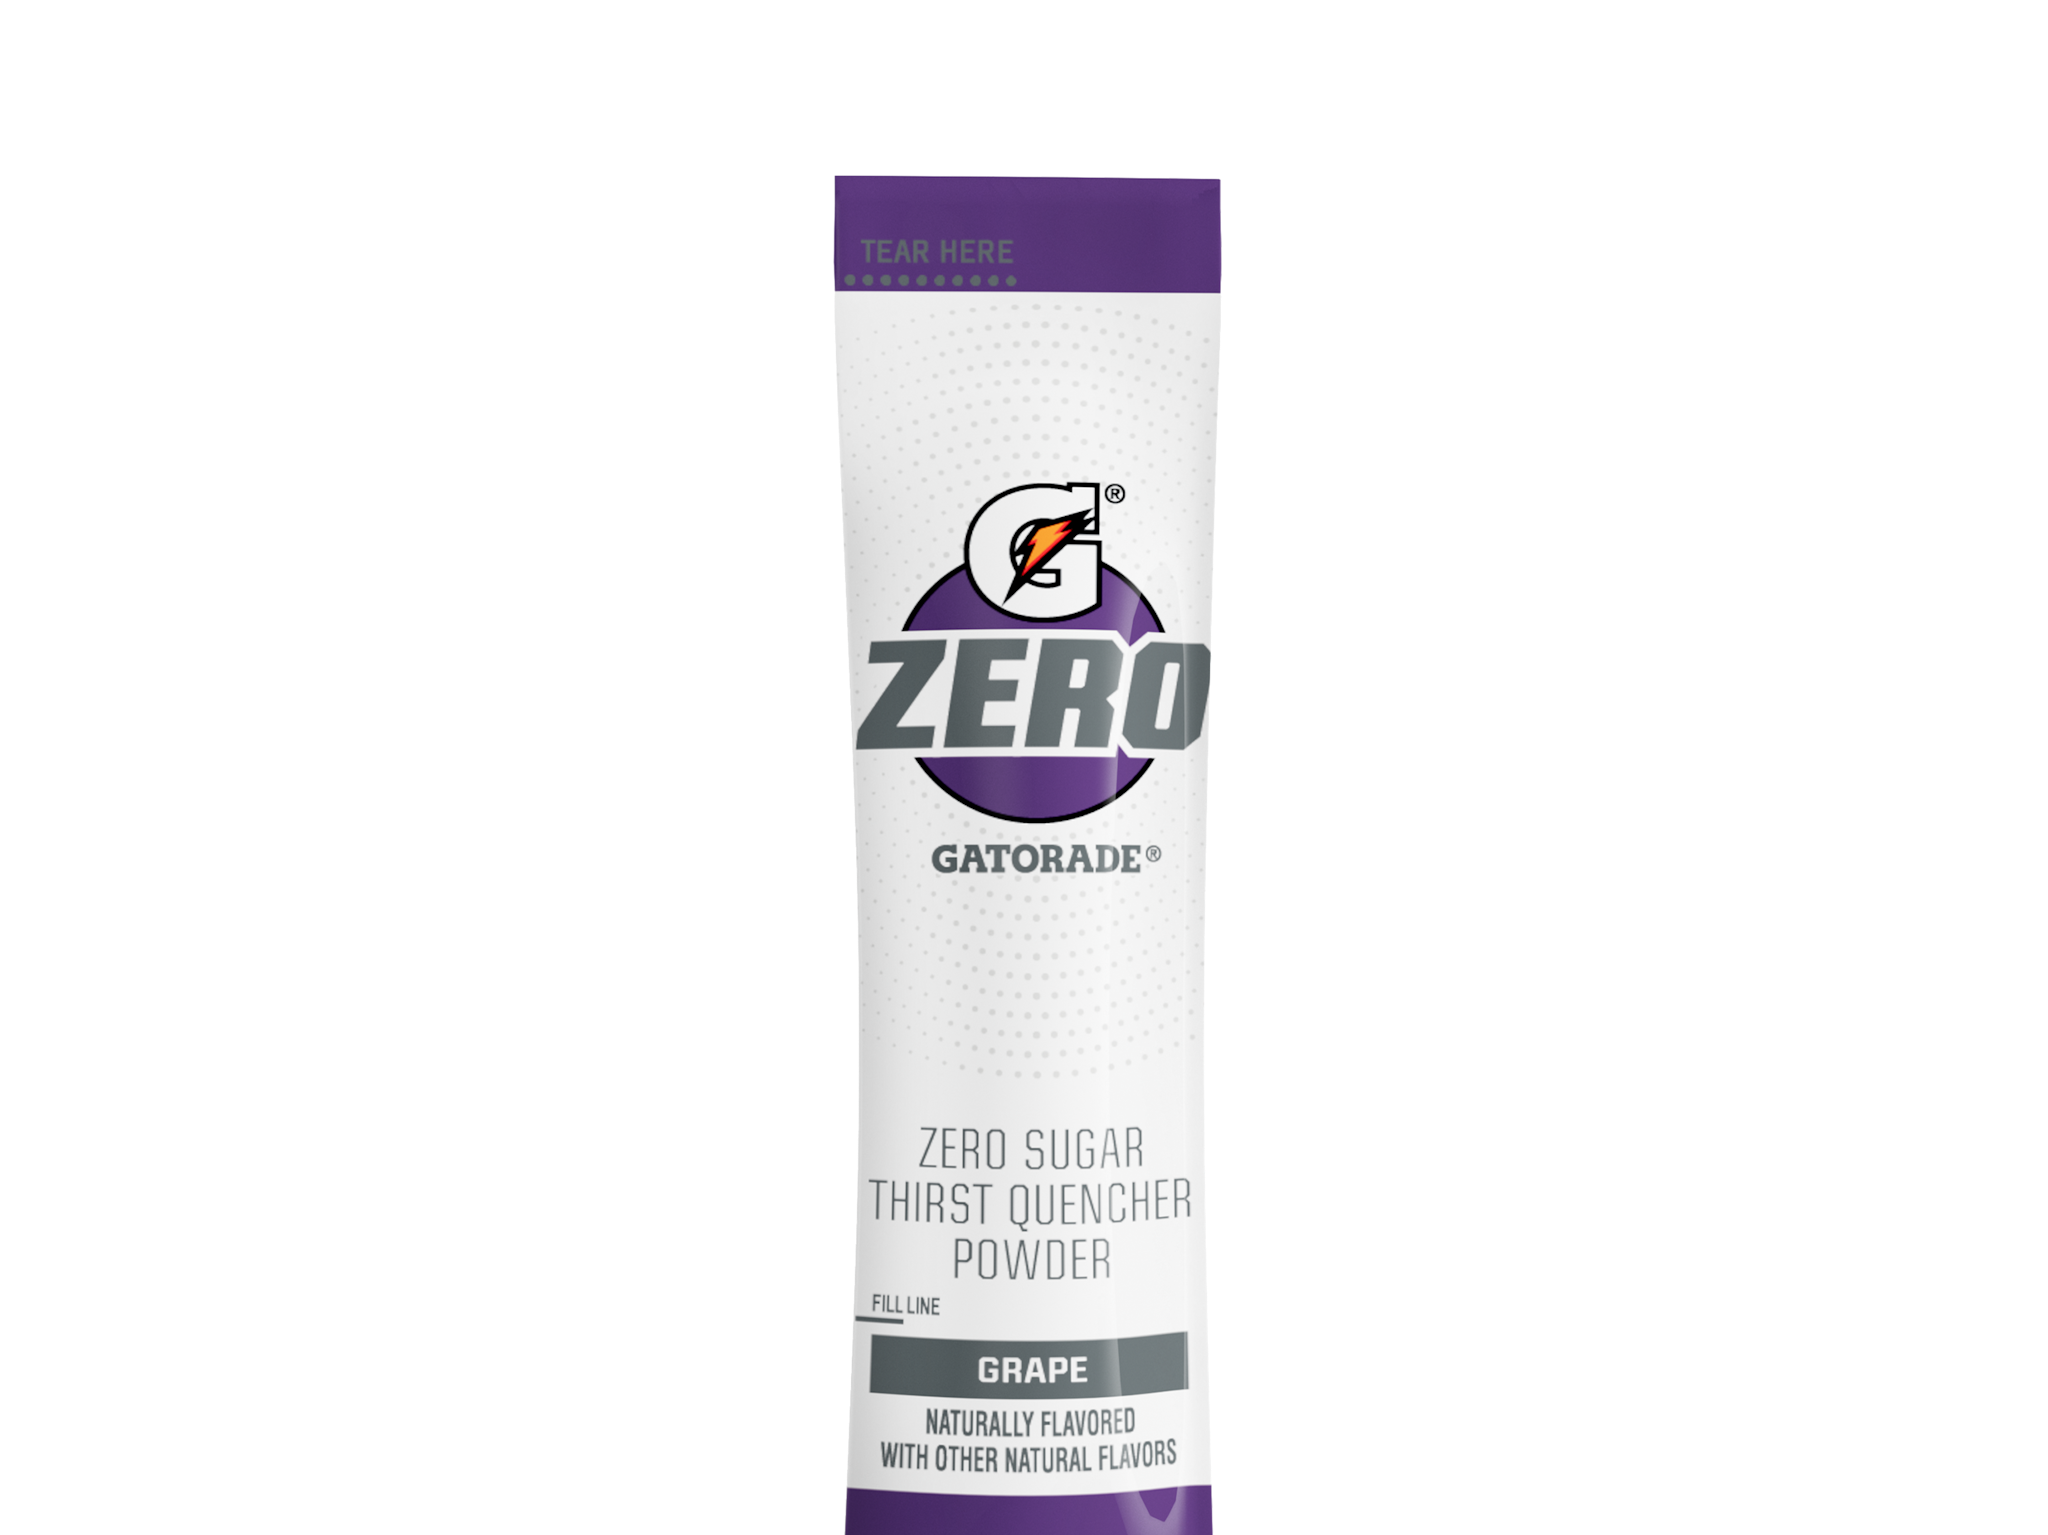 Gatorade zero grape single serve powder